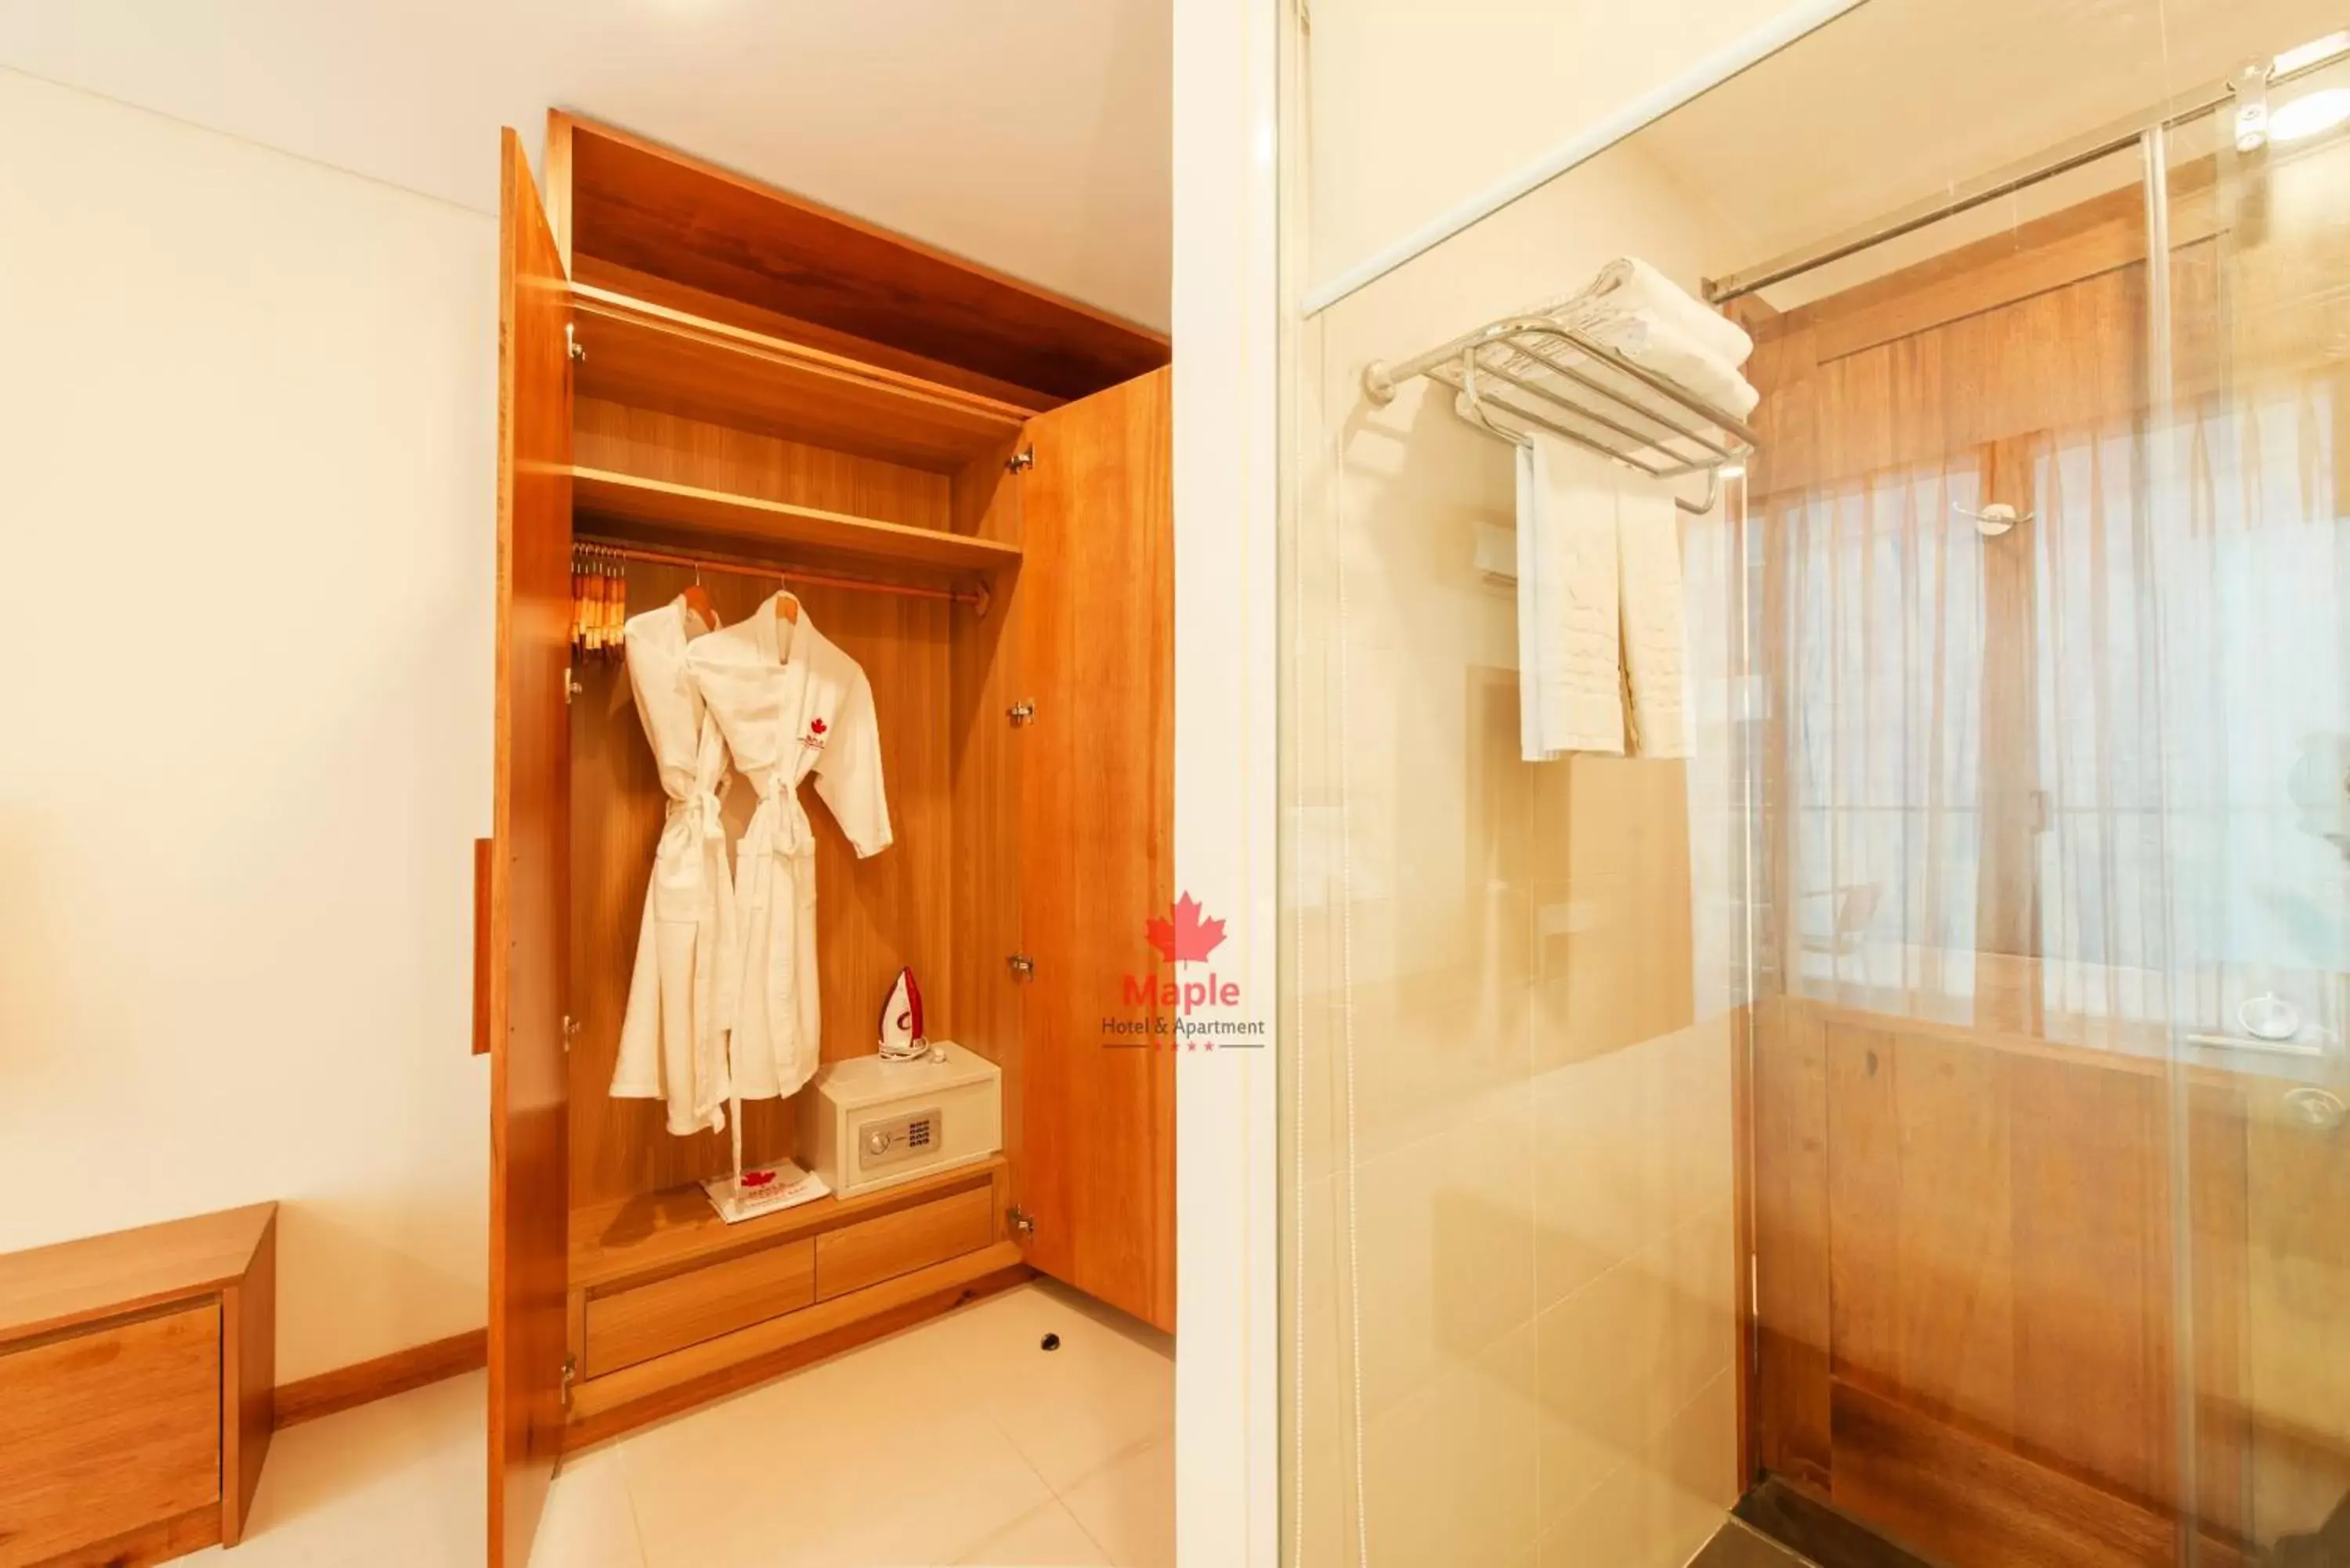 wardrobe, Bathroom in Maple Hotel & Apartment